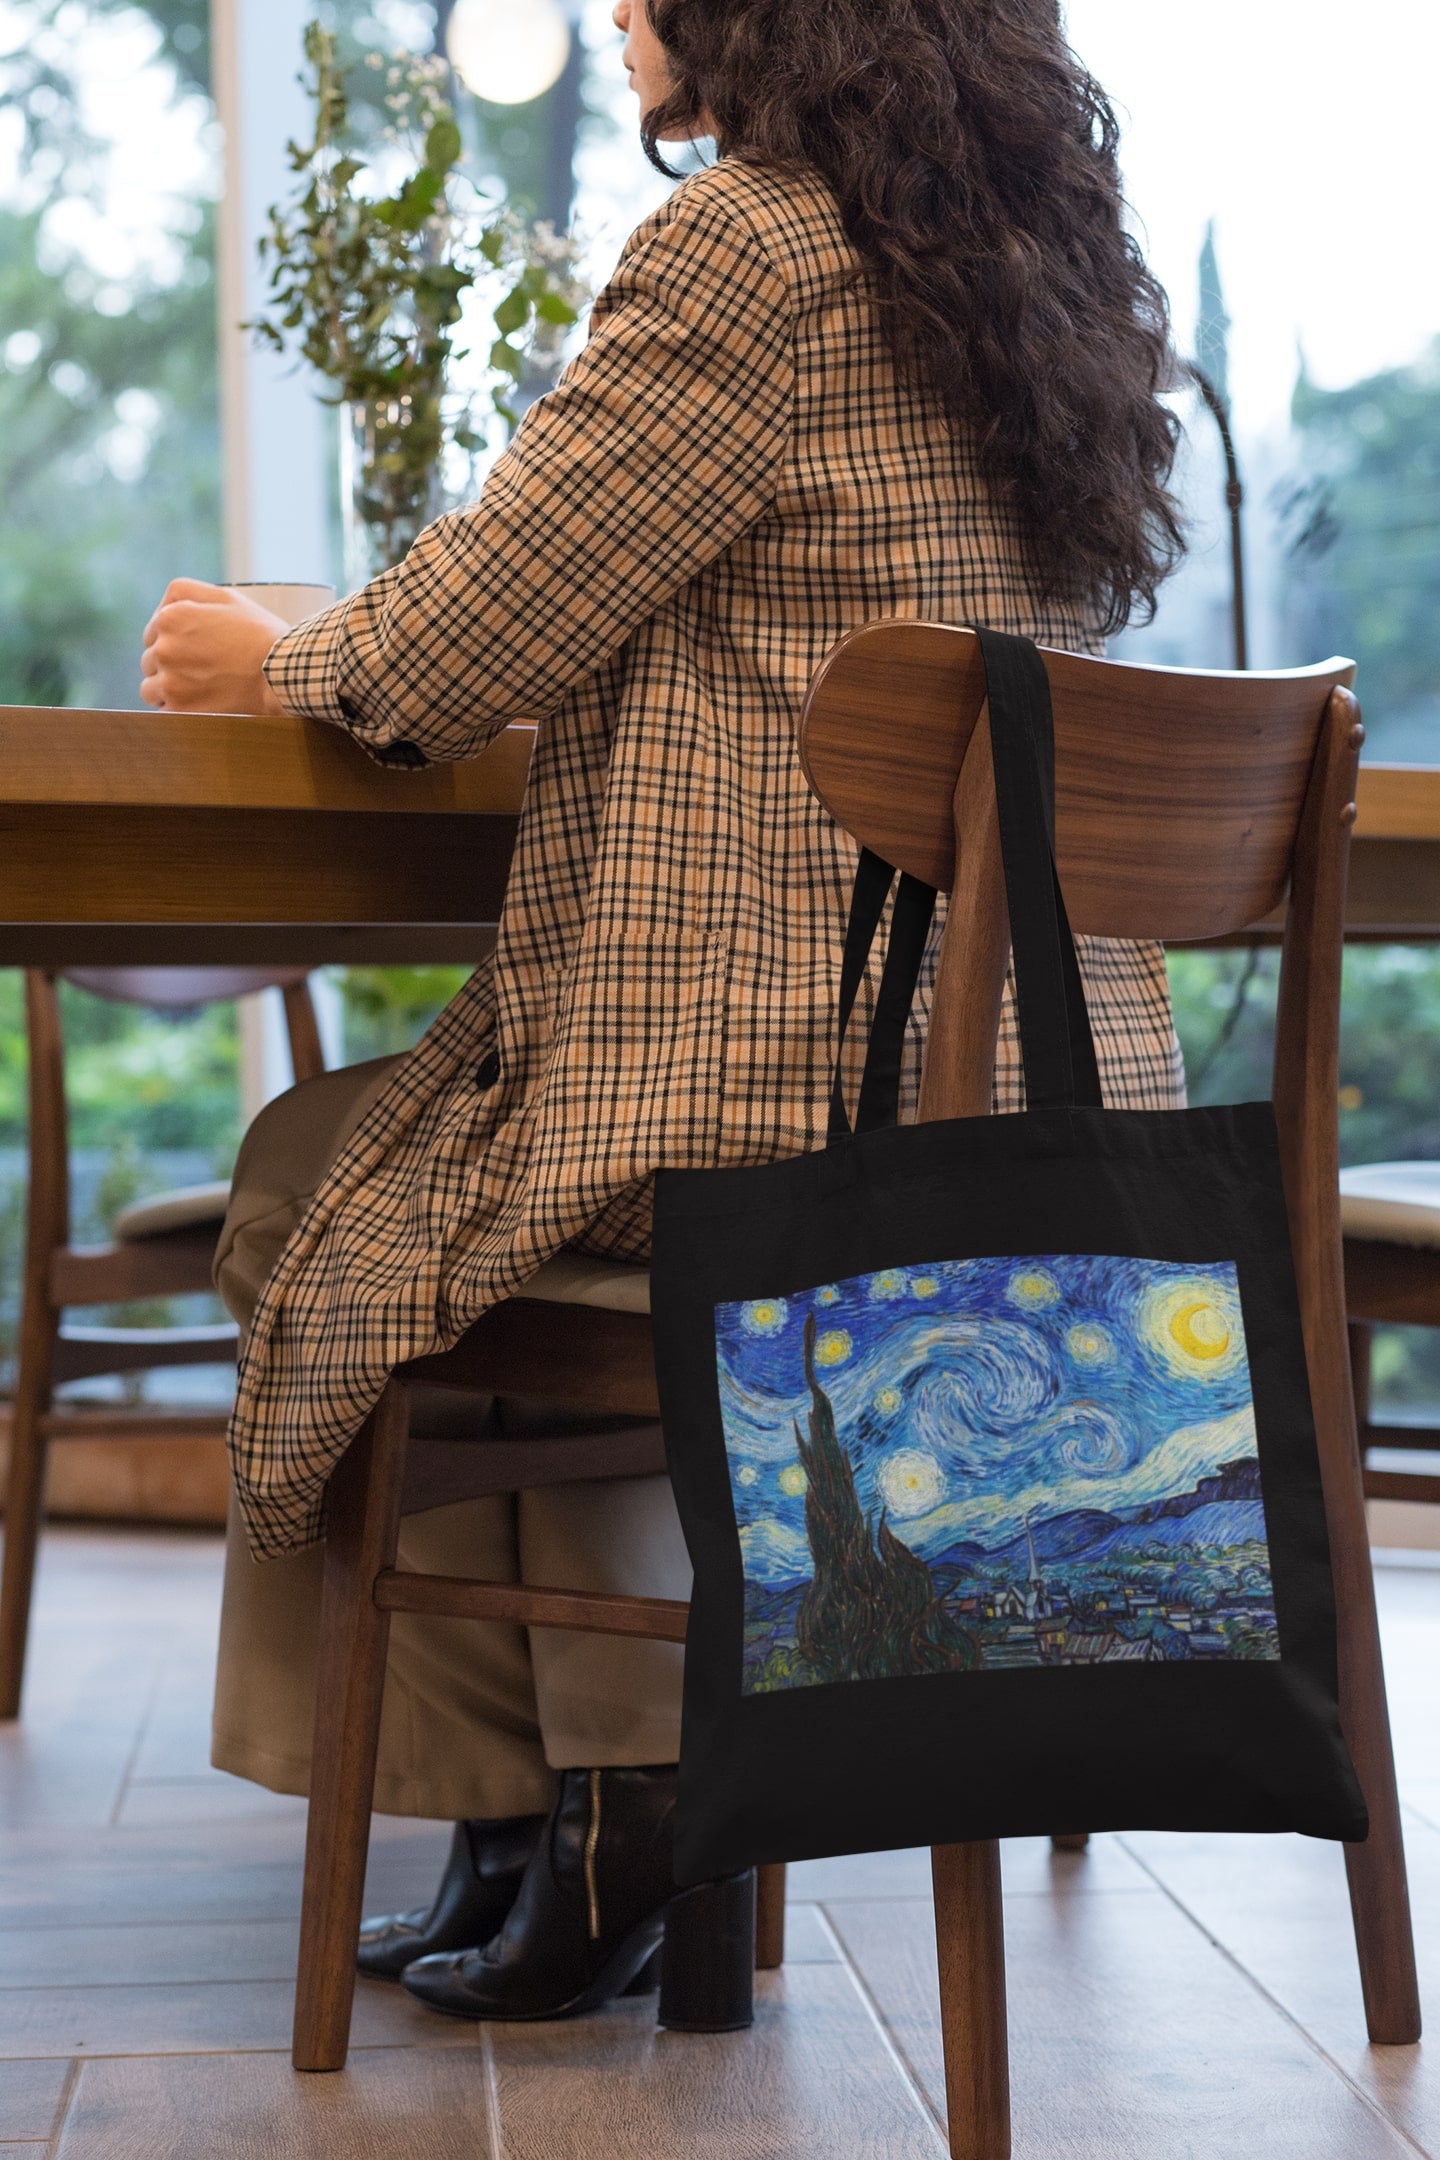 Black Canvas Cotton Zipper Tote Bag - Starry Night by Van Gogh – Soulla